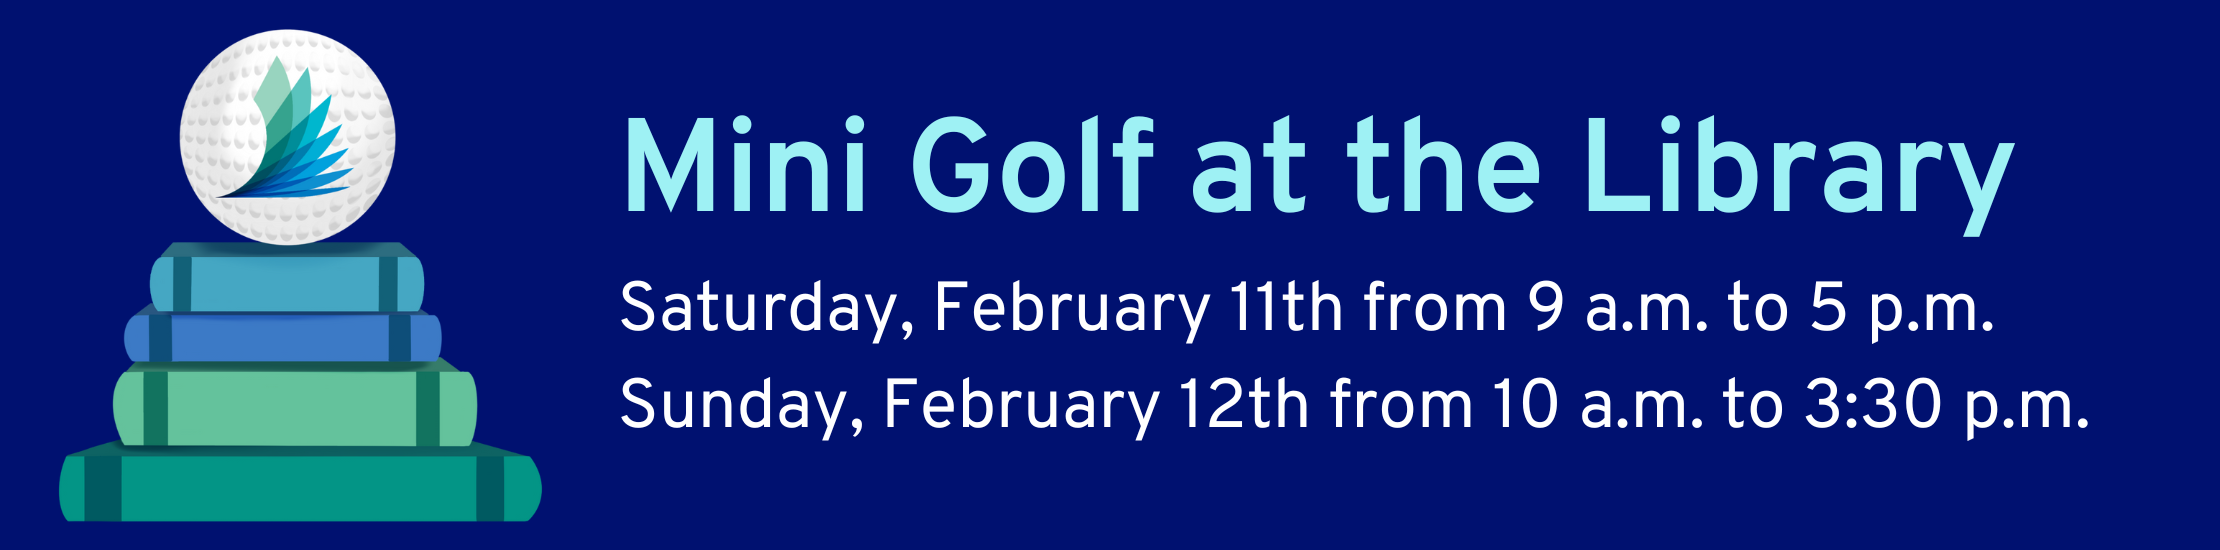 Mini Golf at the Library: Saturday, February 11th from 9 a.m. to 5 p.m. and Sunday, February 12th from 10 a.m. to 3:30 p.m.